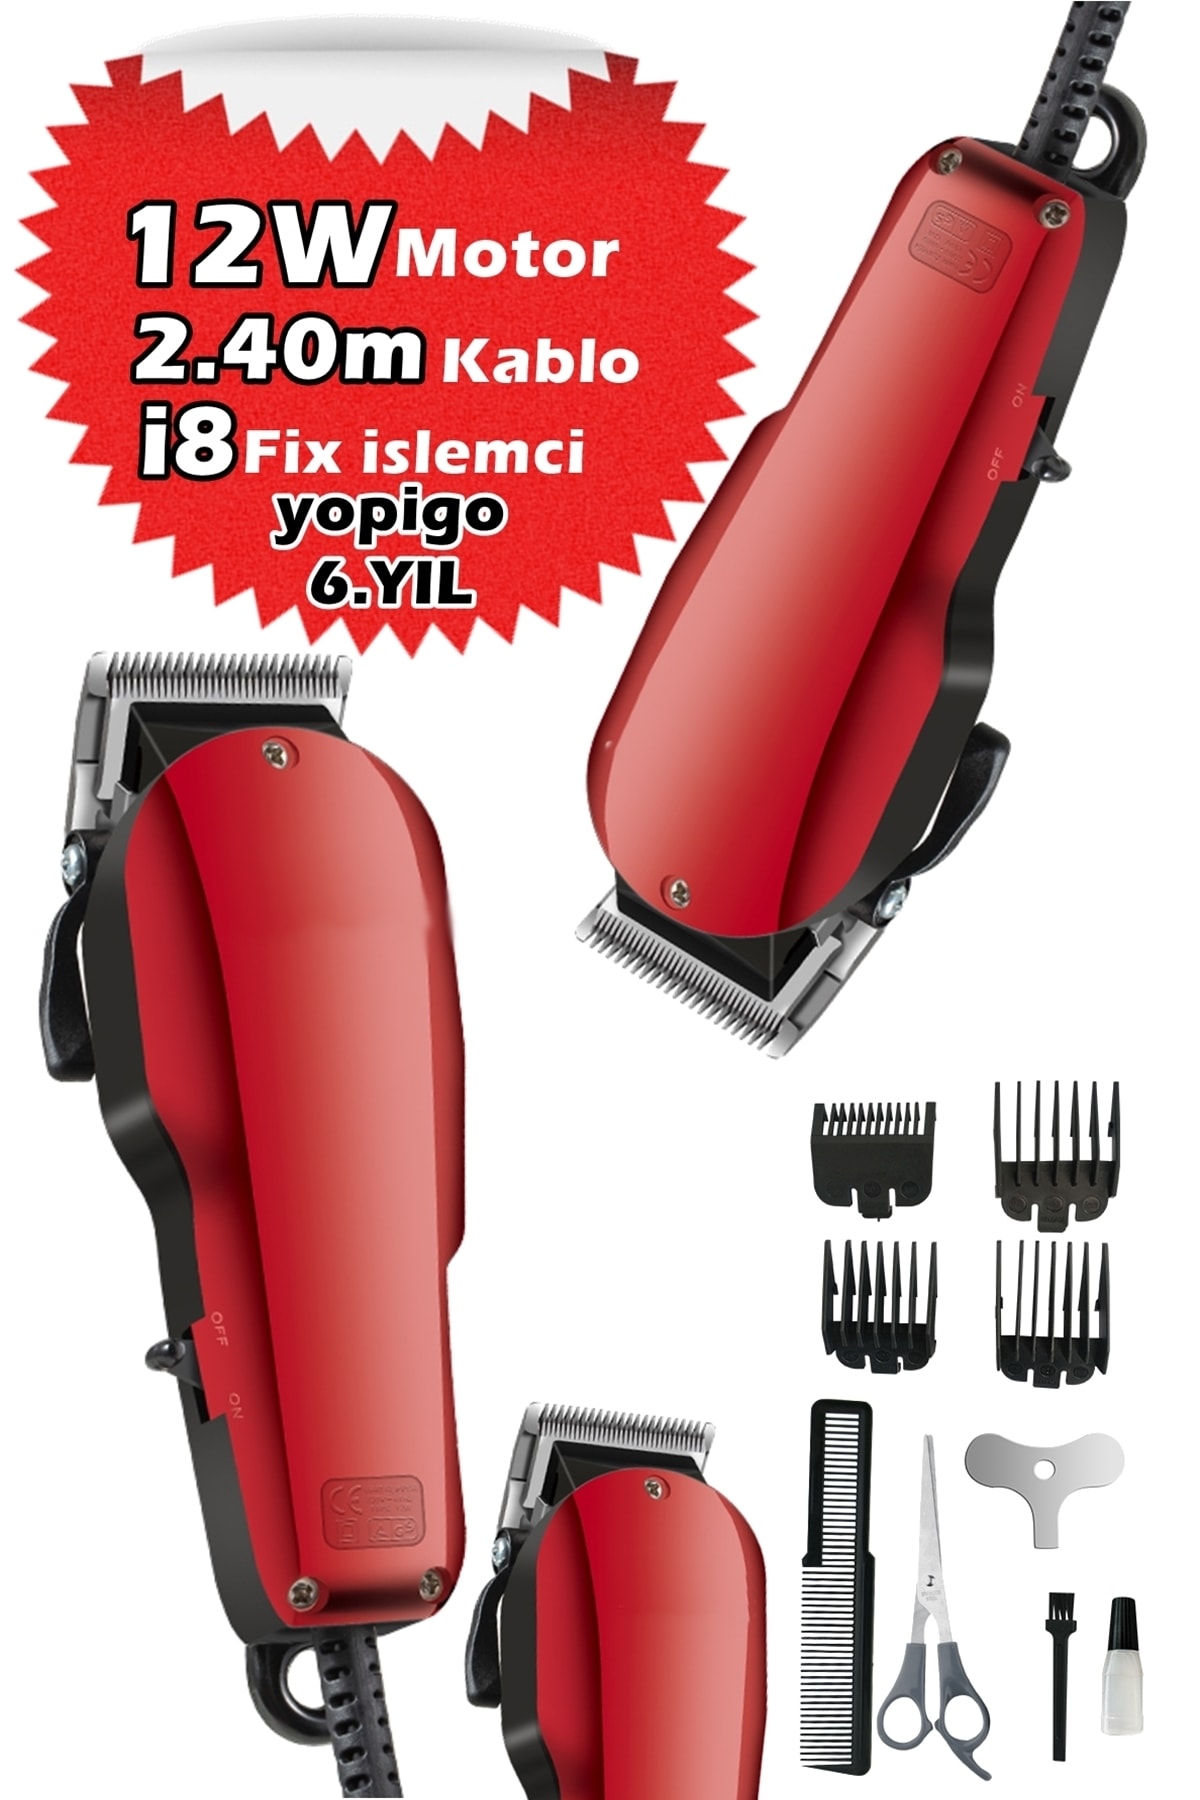 yopigo Gm-1005 Pro Kablolu Saç & Sakal Kesme Makinesi Tıraş Makinesi Go-max Serisi